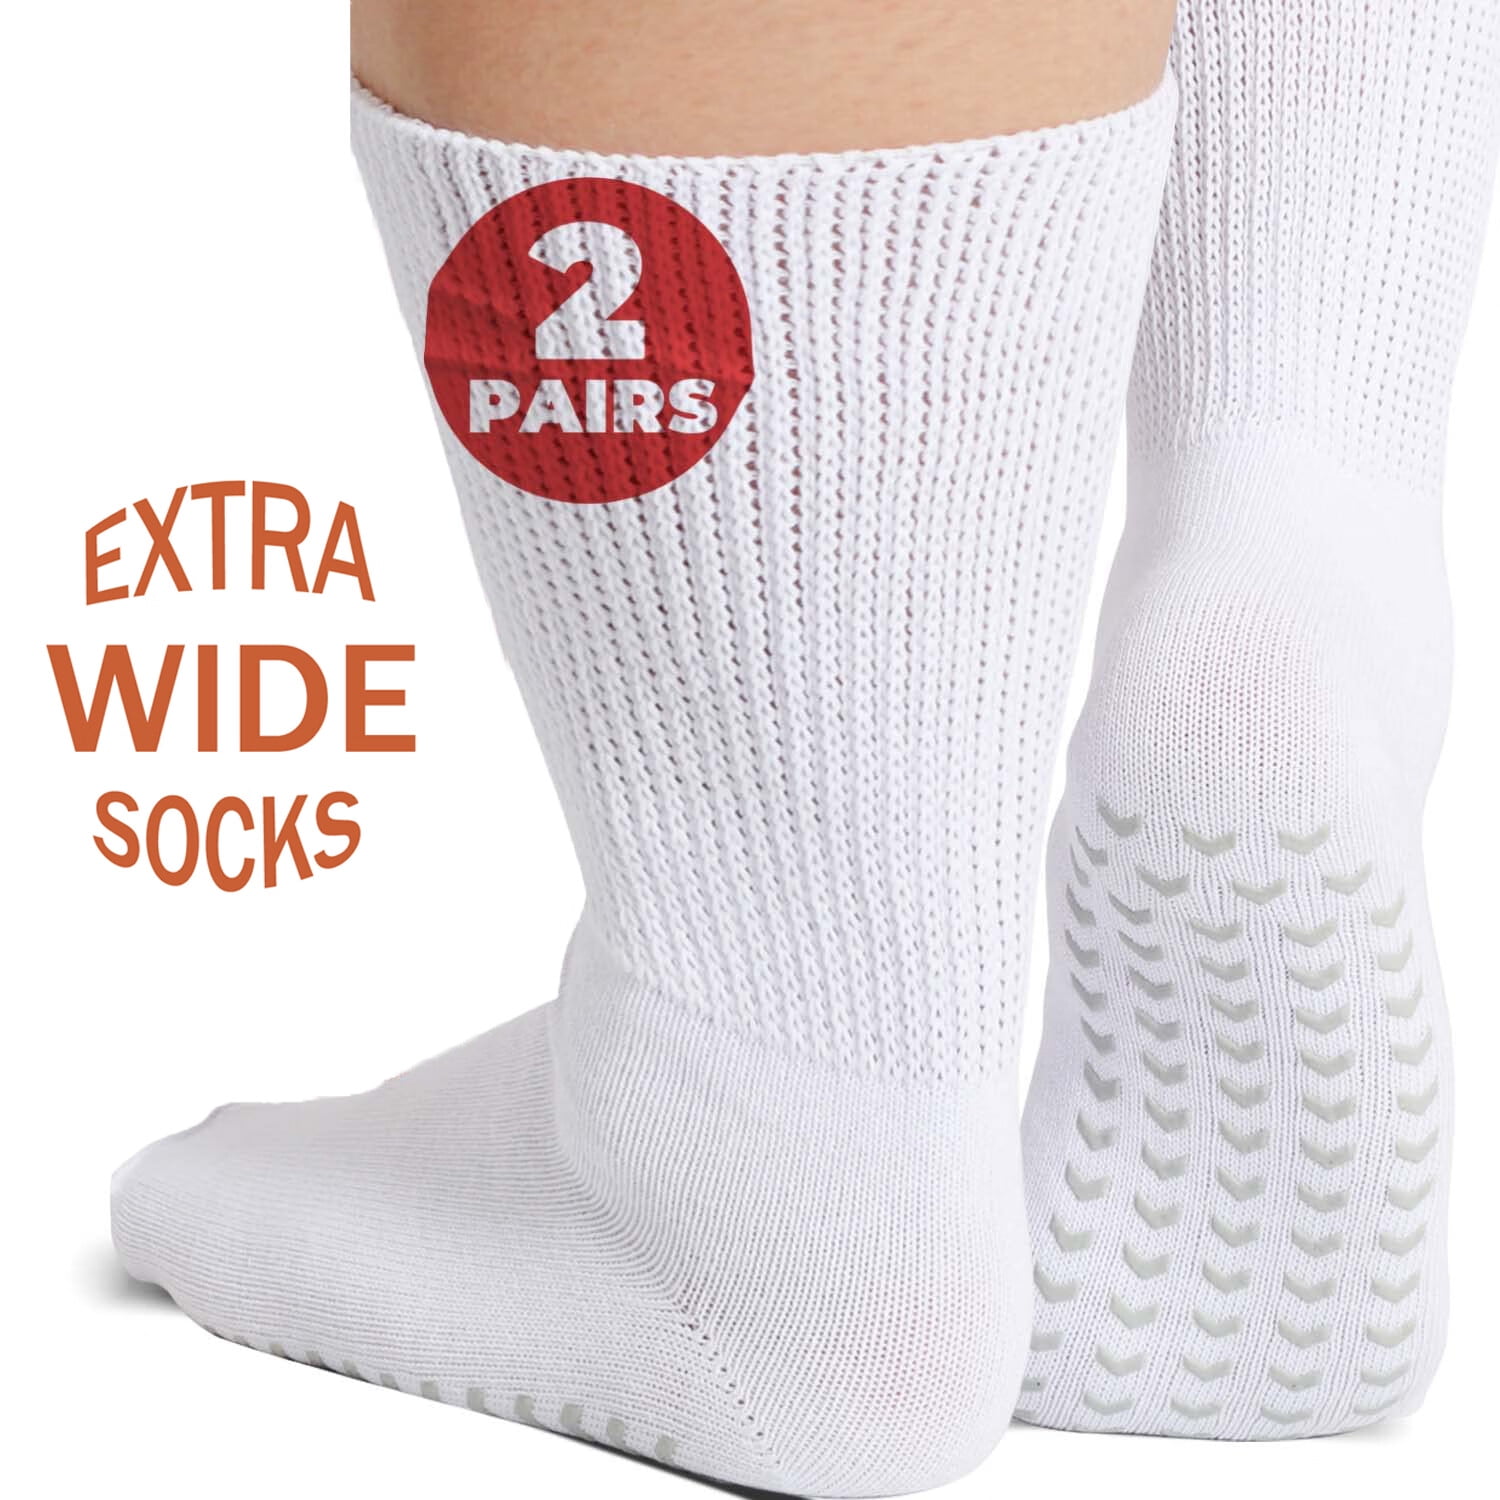 Extra Wide Socks